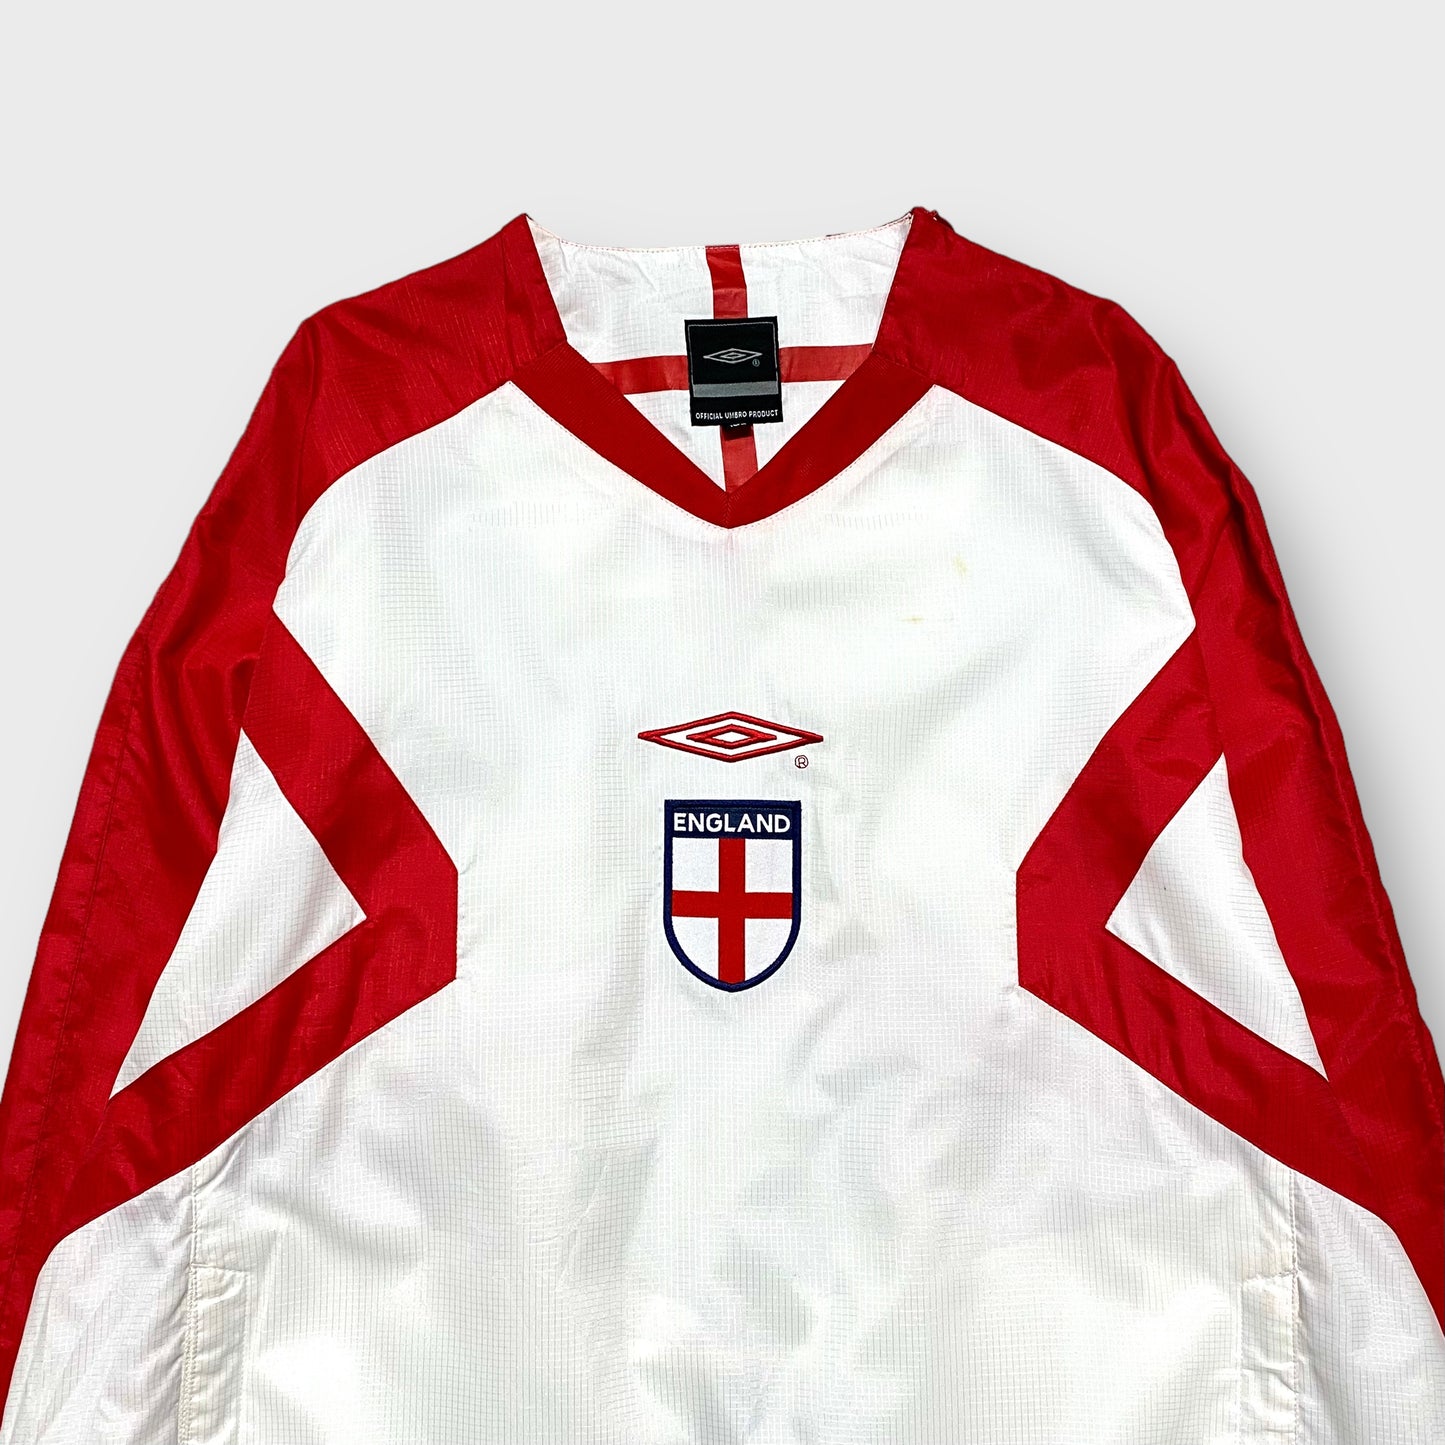 00's "umbro" England national football team nylon pullover